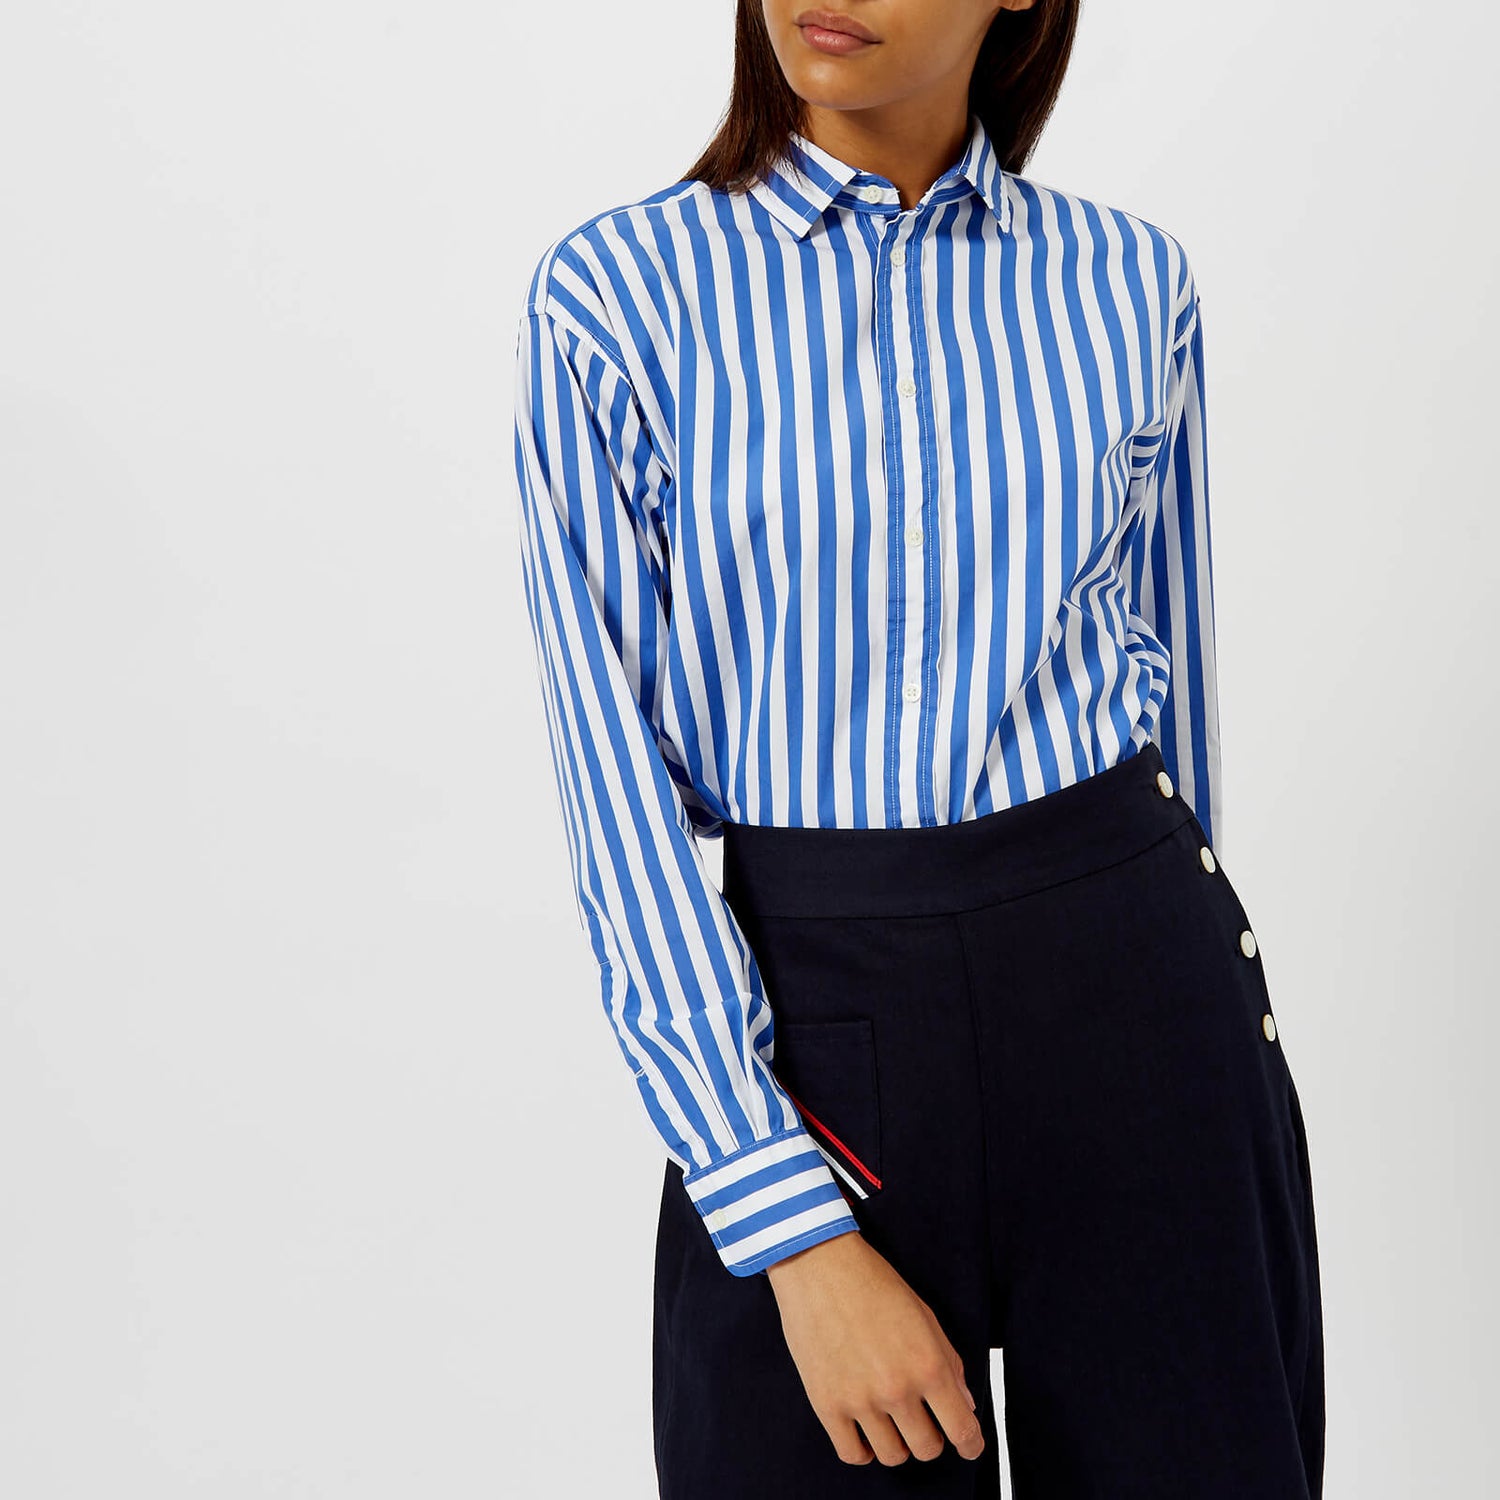 Polo Ralph Lauren Women's Ramsey Stripe Shirt - Blue/White